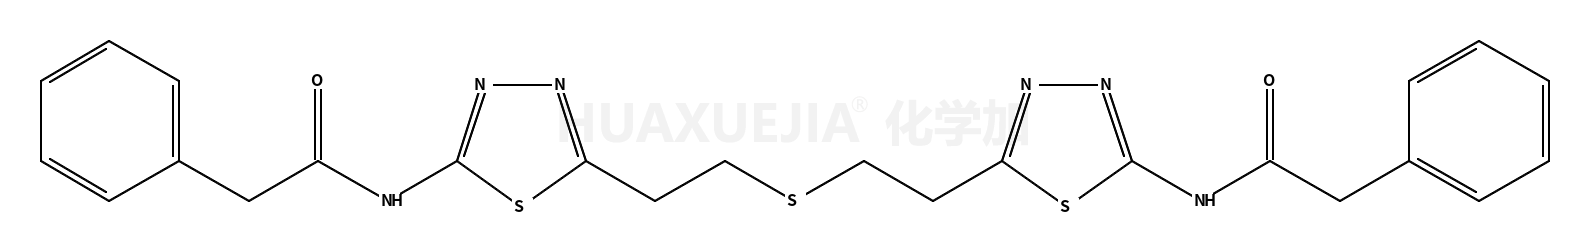 2-phenyl-N-[5-[2-[2-[5-[(2-phenylacetyl)amino]-1,3,4-thiadiazol-2-yl]ethylsulfanyl]ethyl]-1,3,4-thiadiazol-2-yl]acetamide